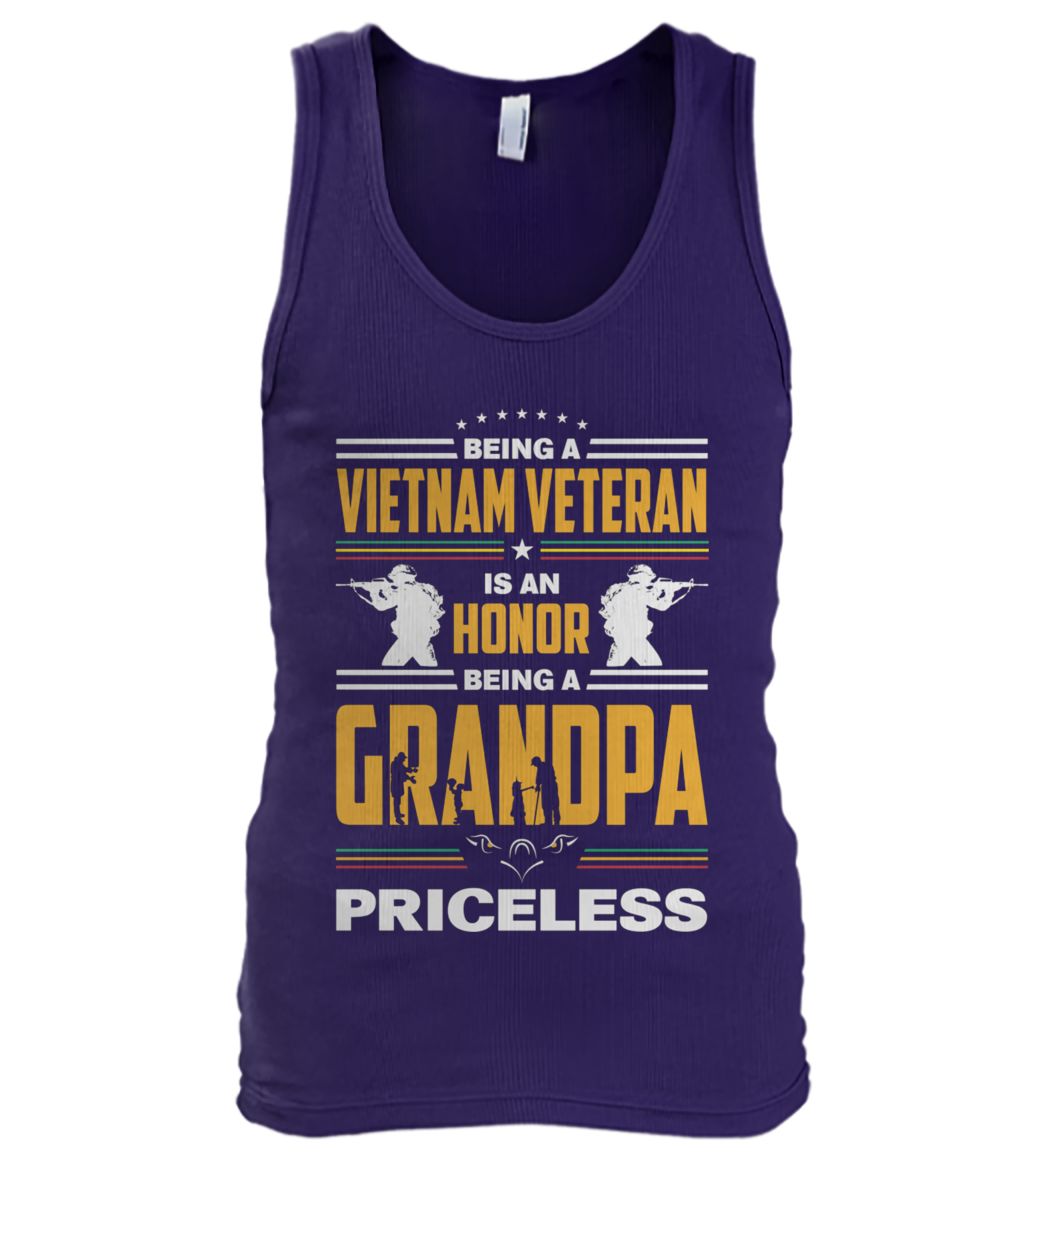 Being a vietnam veteran is an honor being grandpa priceless men's tank top